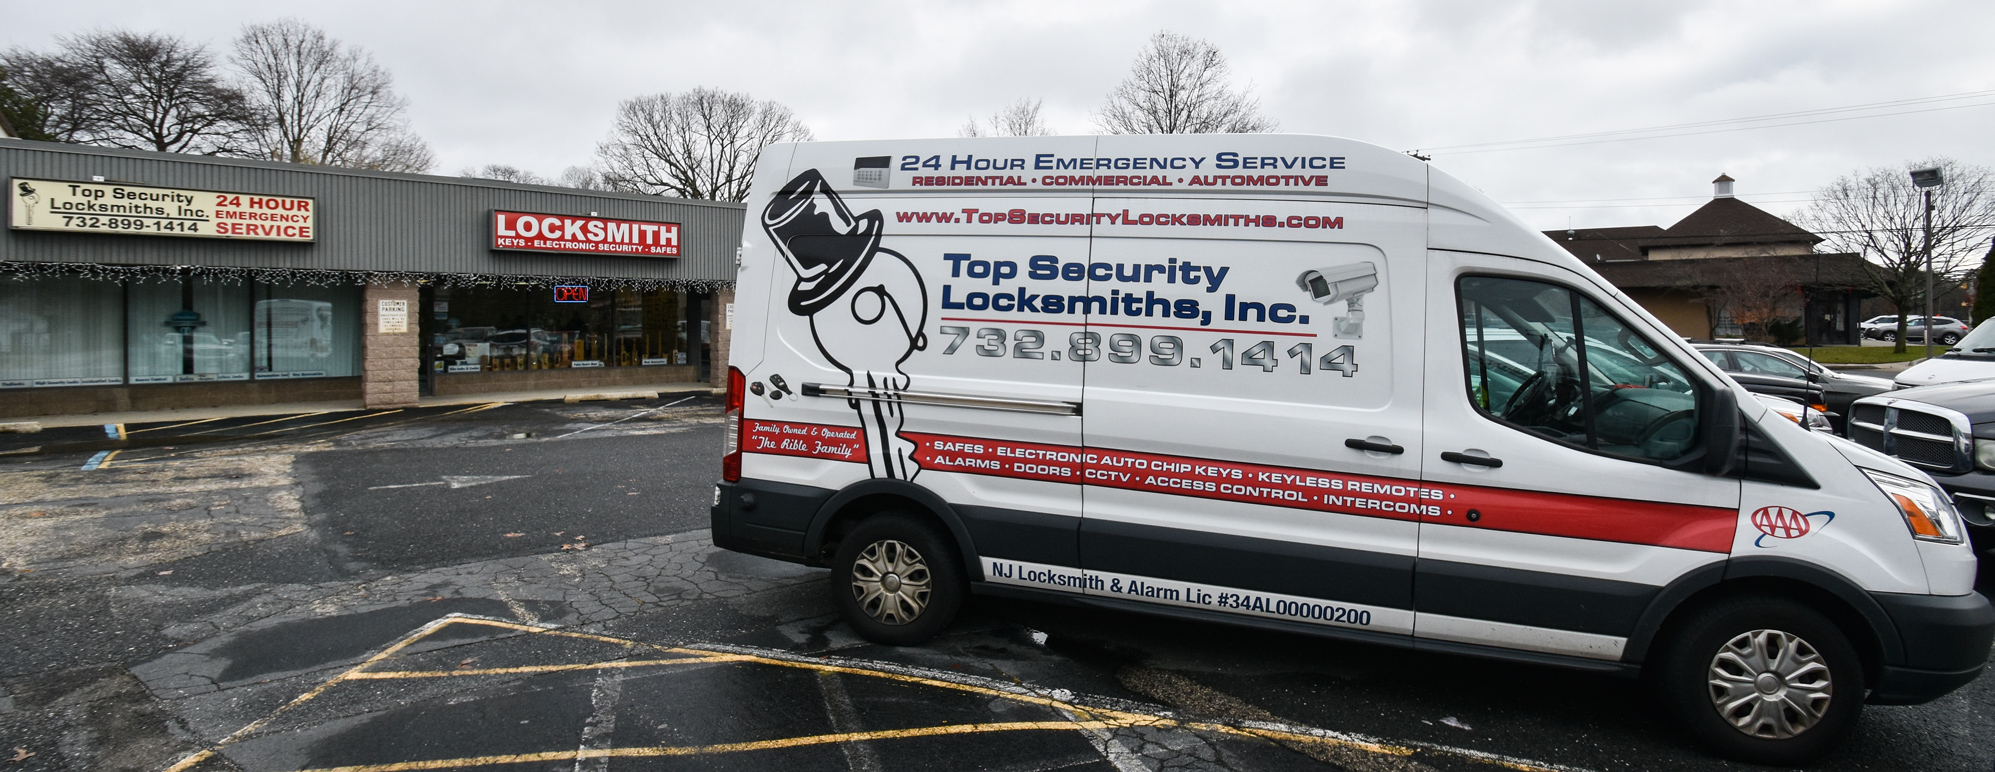 Top Security Locksmiths Van and showroom